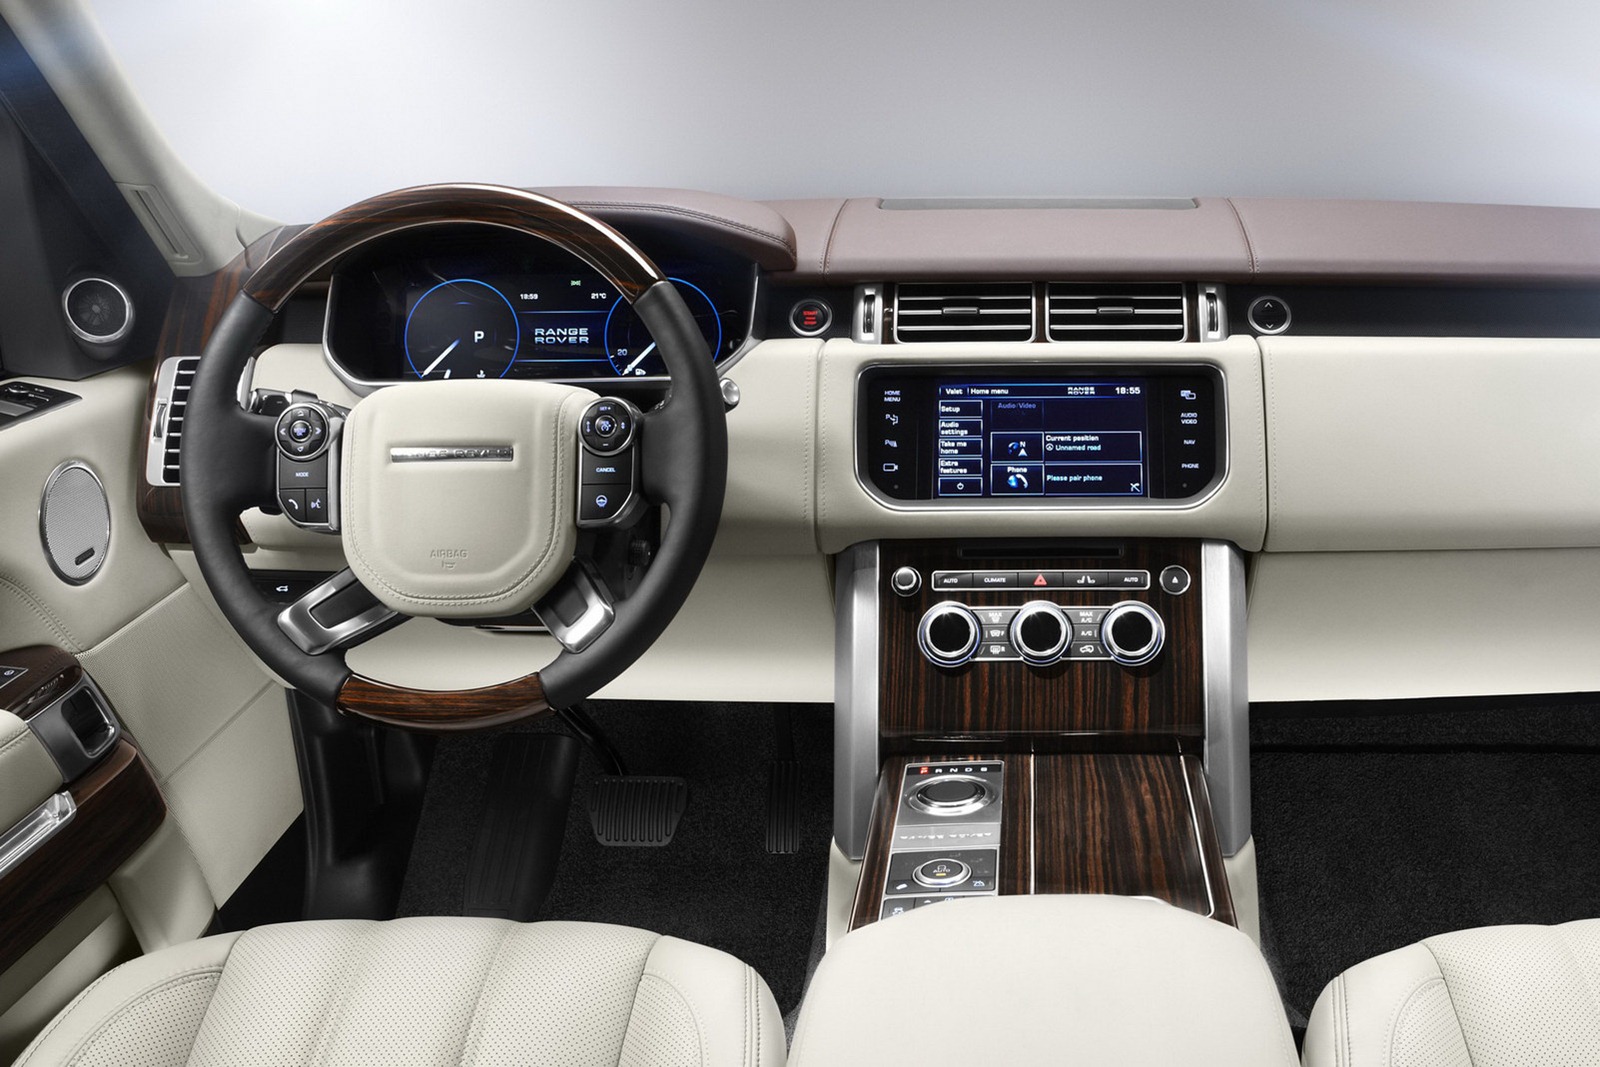 2014 Land Rover Range Rover Interior View